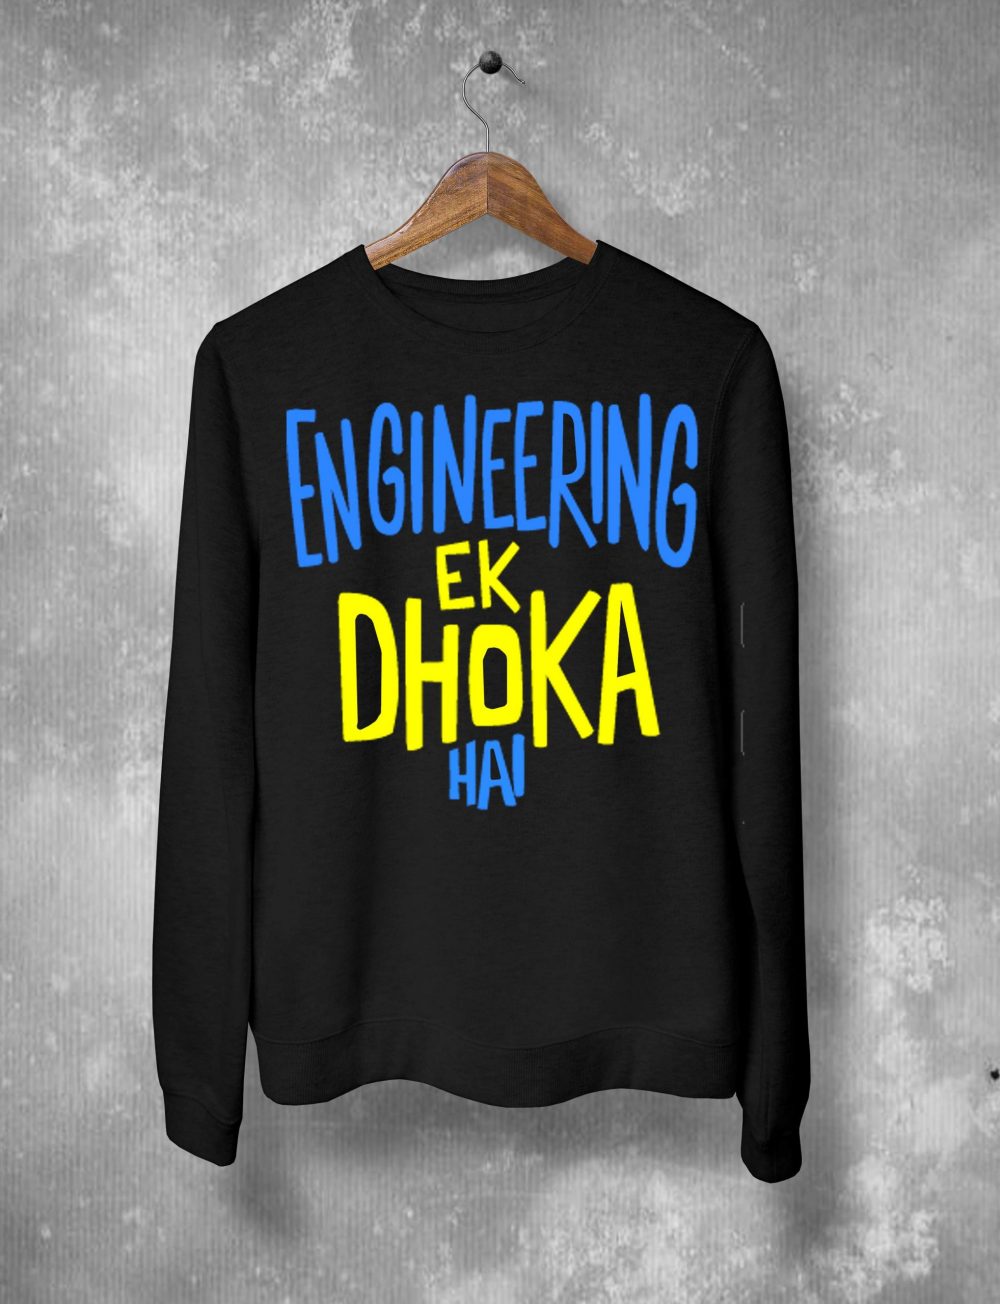 Engineering Ek Dhoka Hai Sweatshirt By Teez Mar Khan - Pickshop.Pk